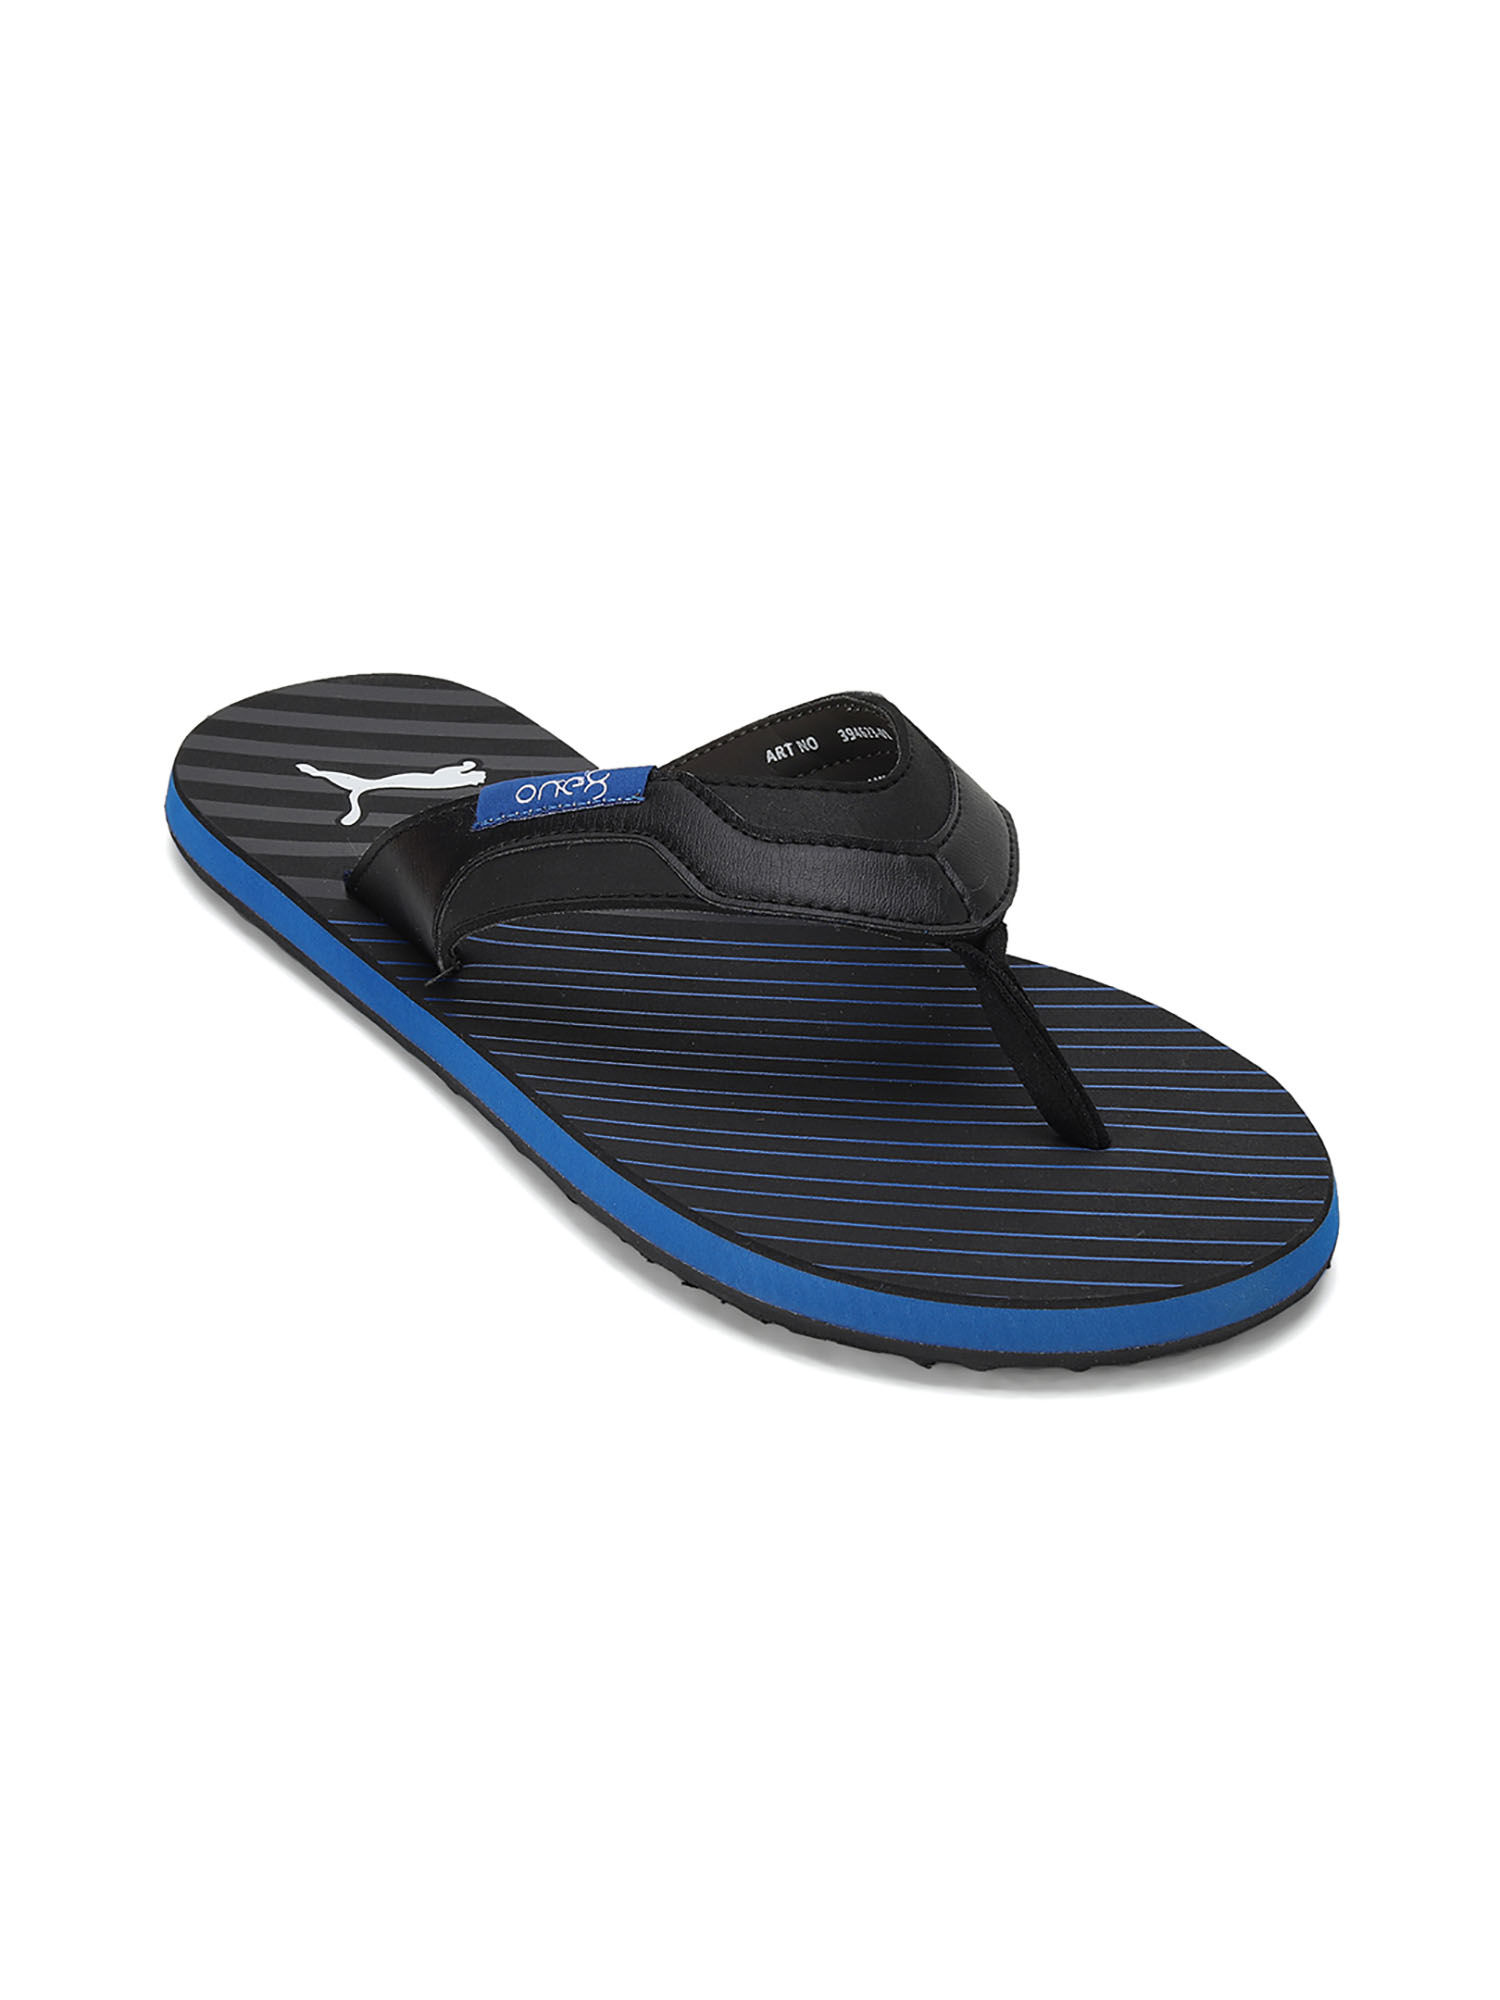 Details 110+ puma flip flop slippers latest